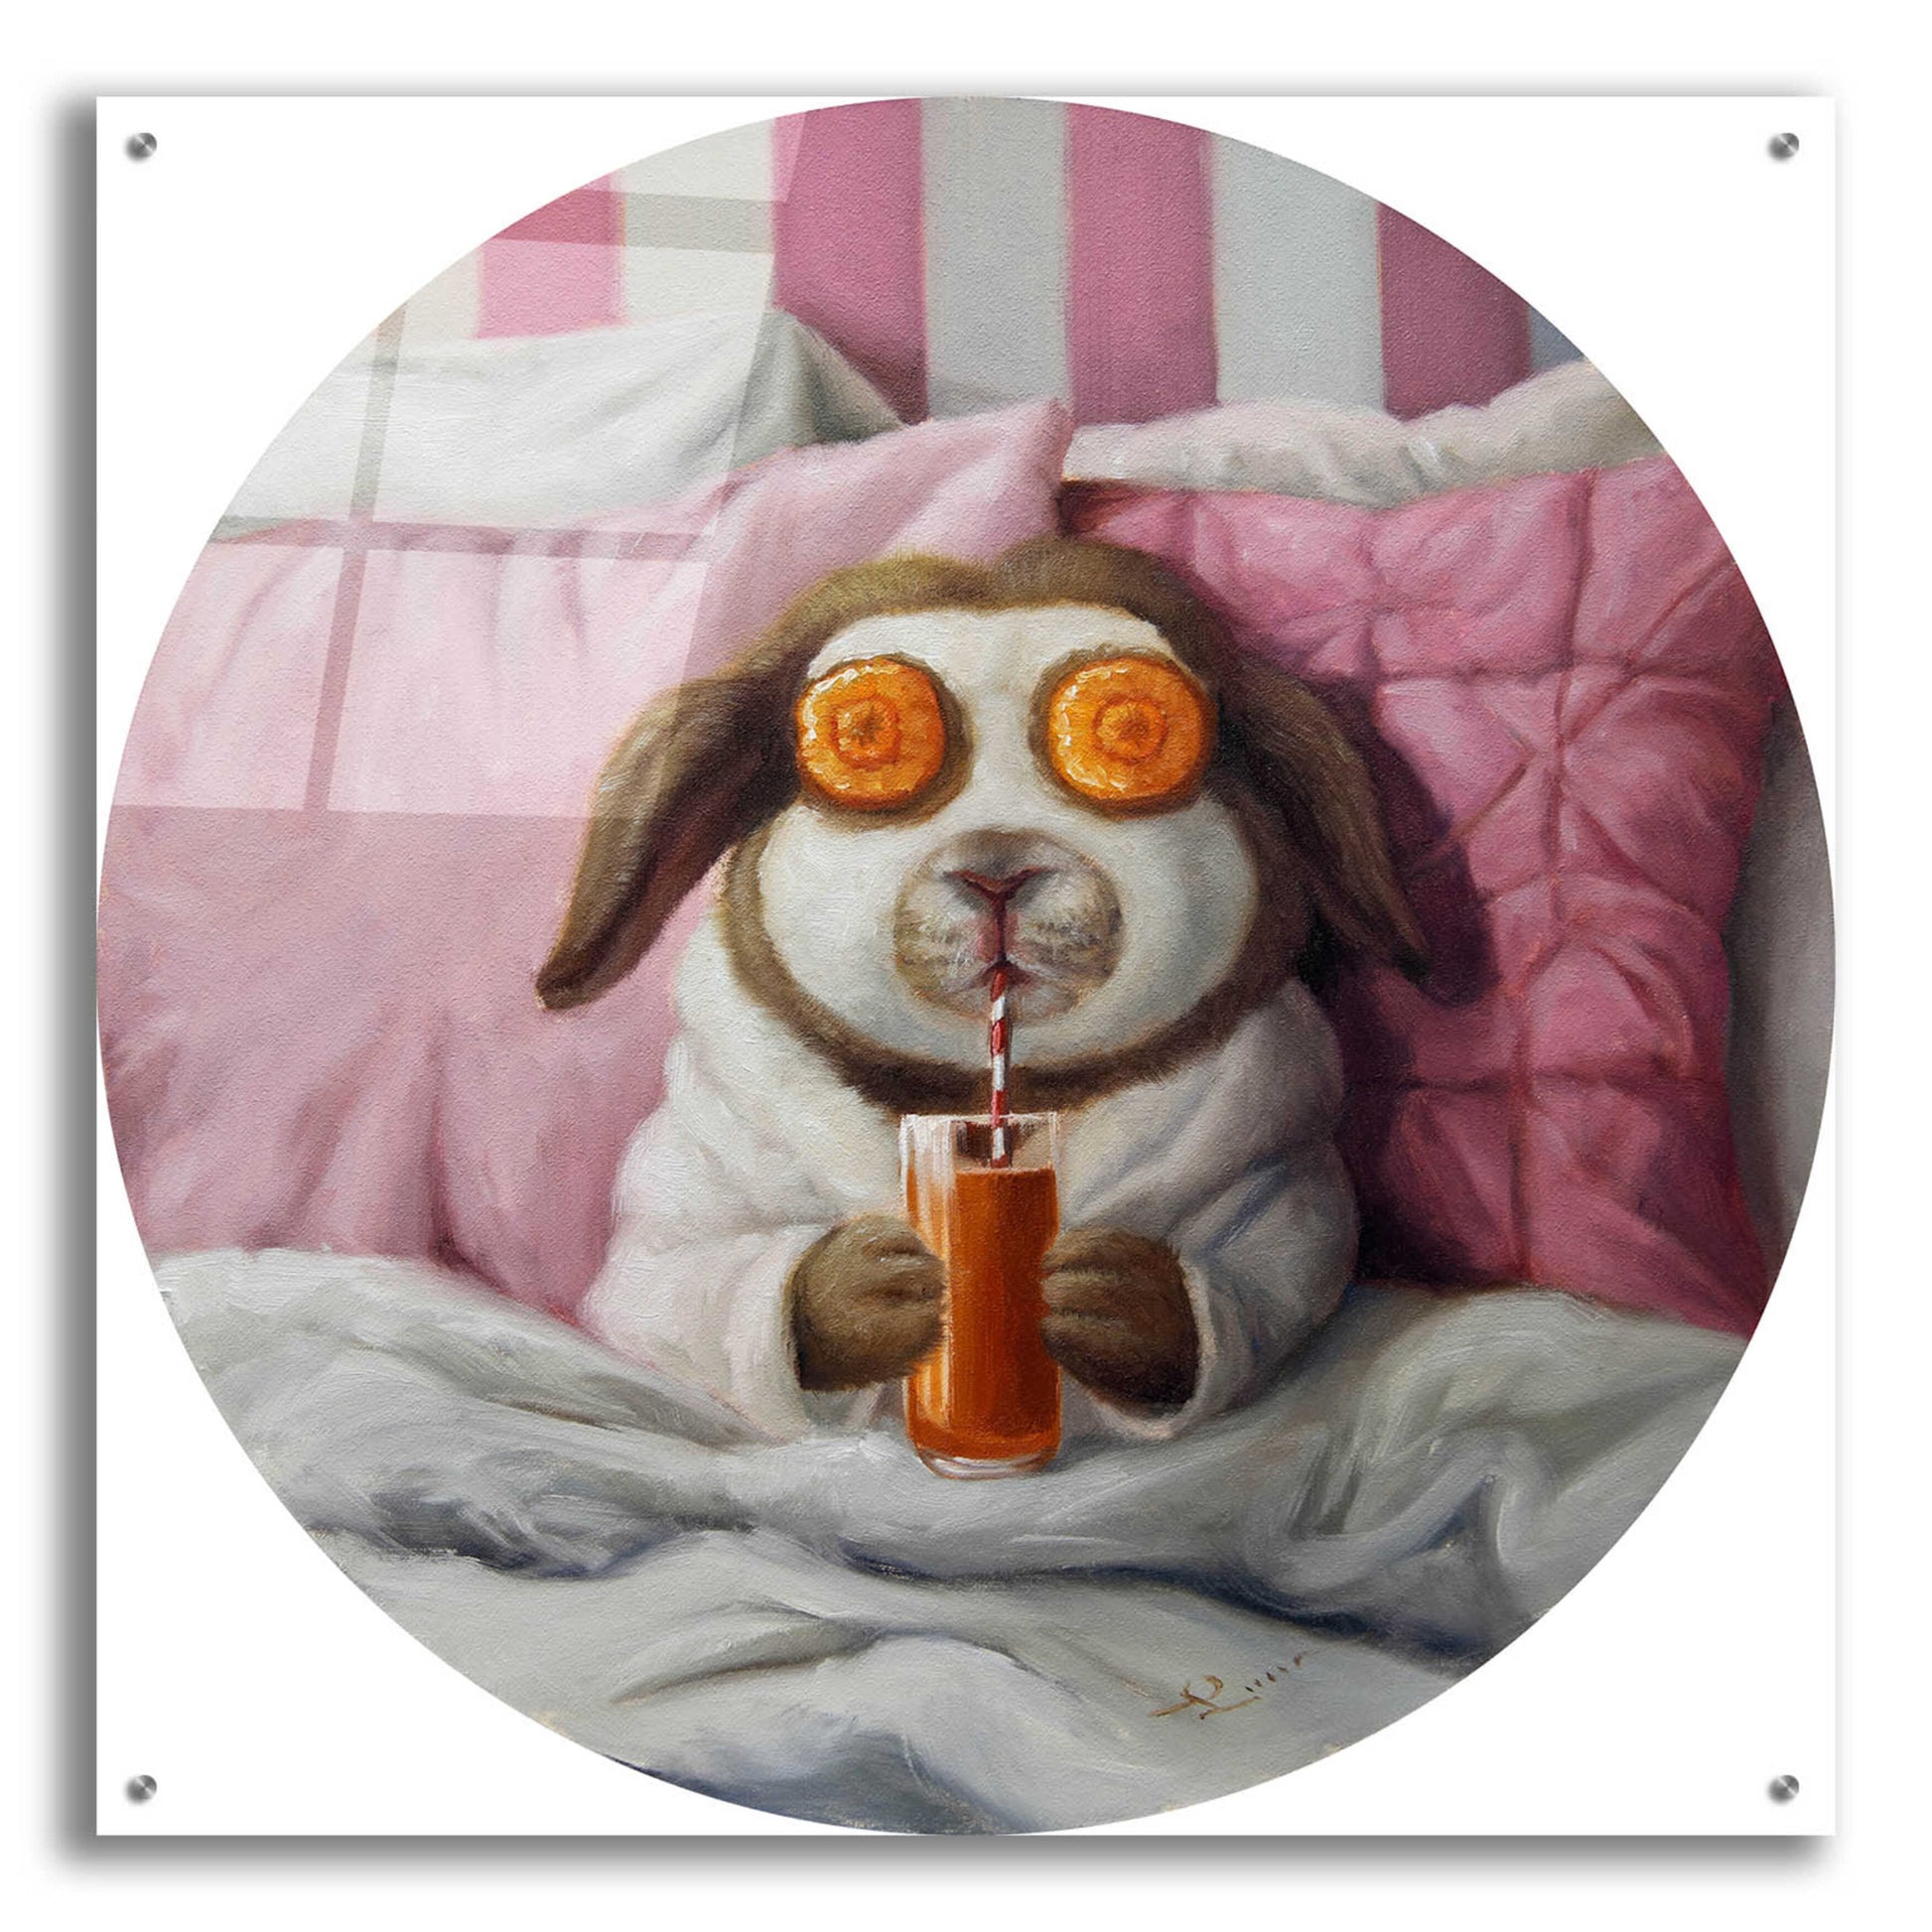 Epic Art 'Personal Carrot Day' by Lucia Heffernan,36x36